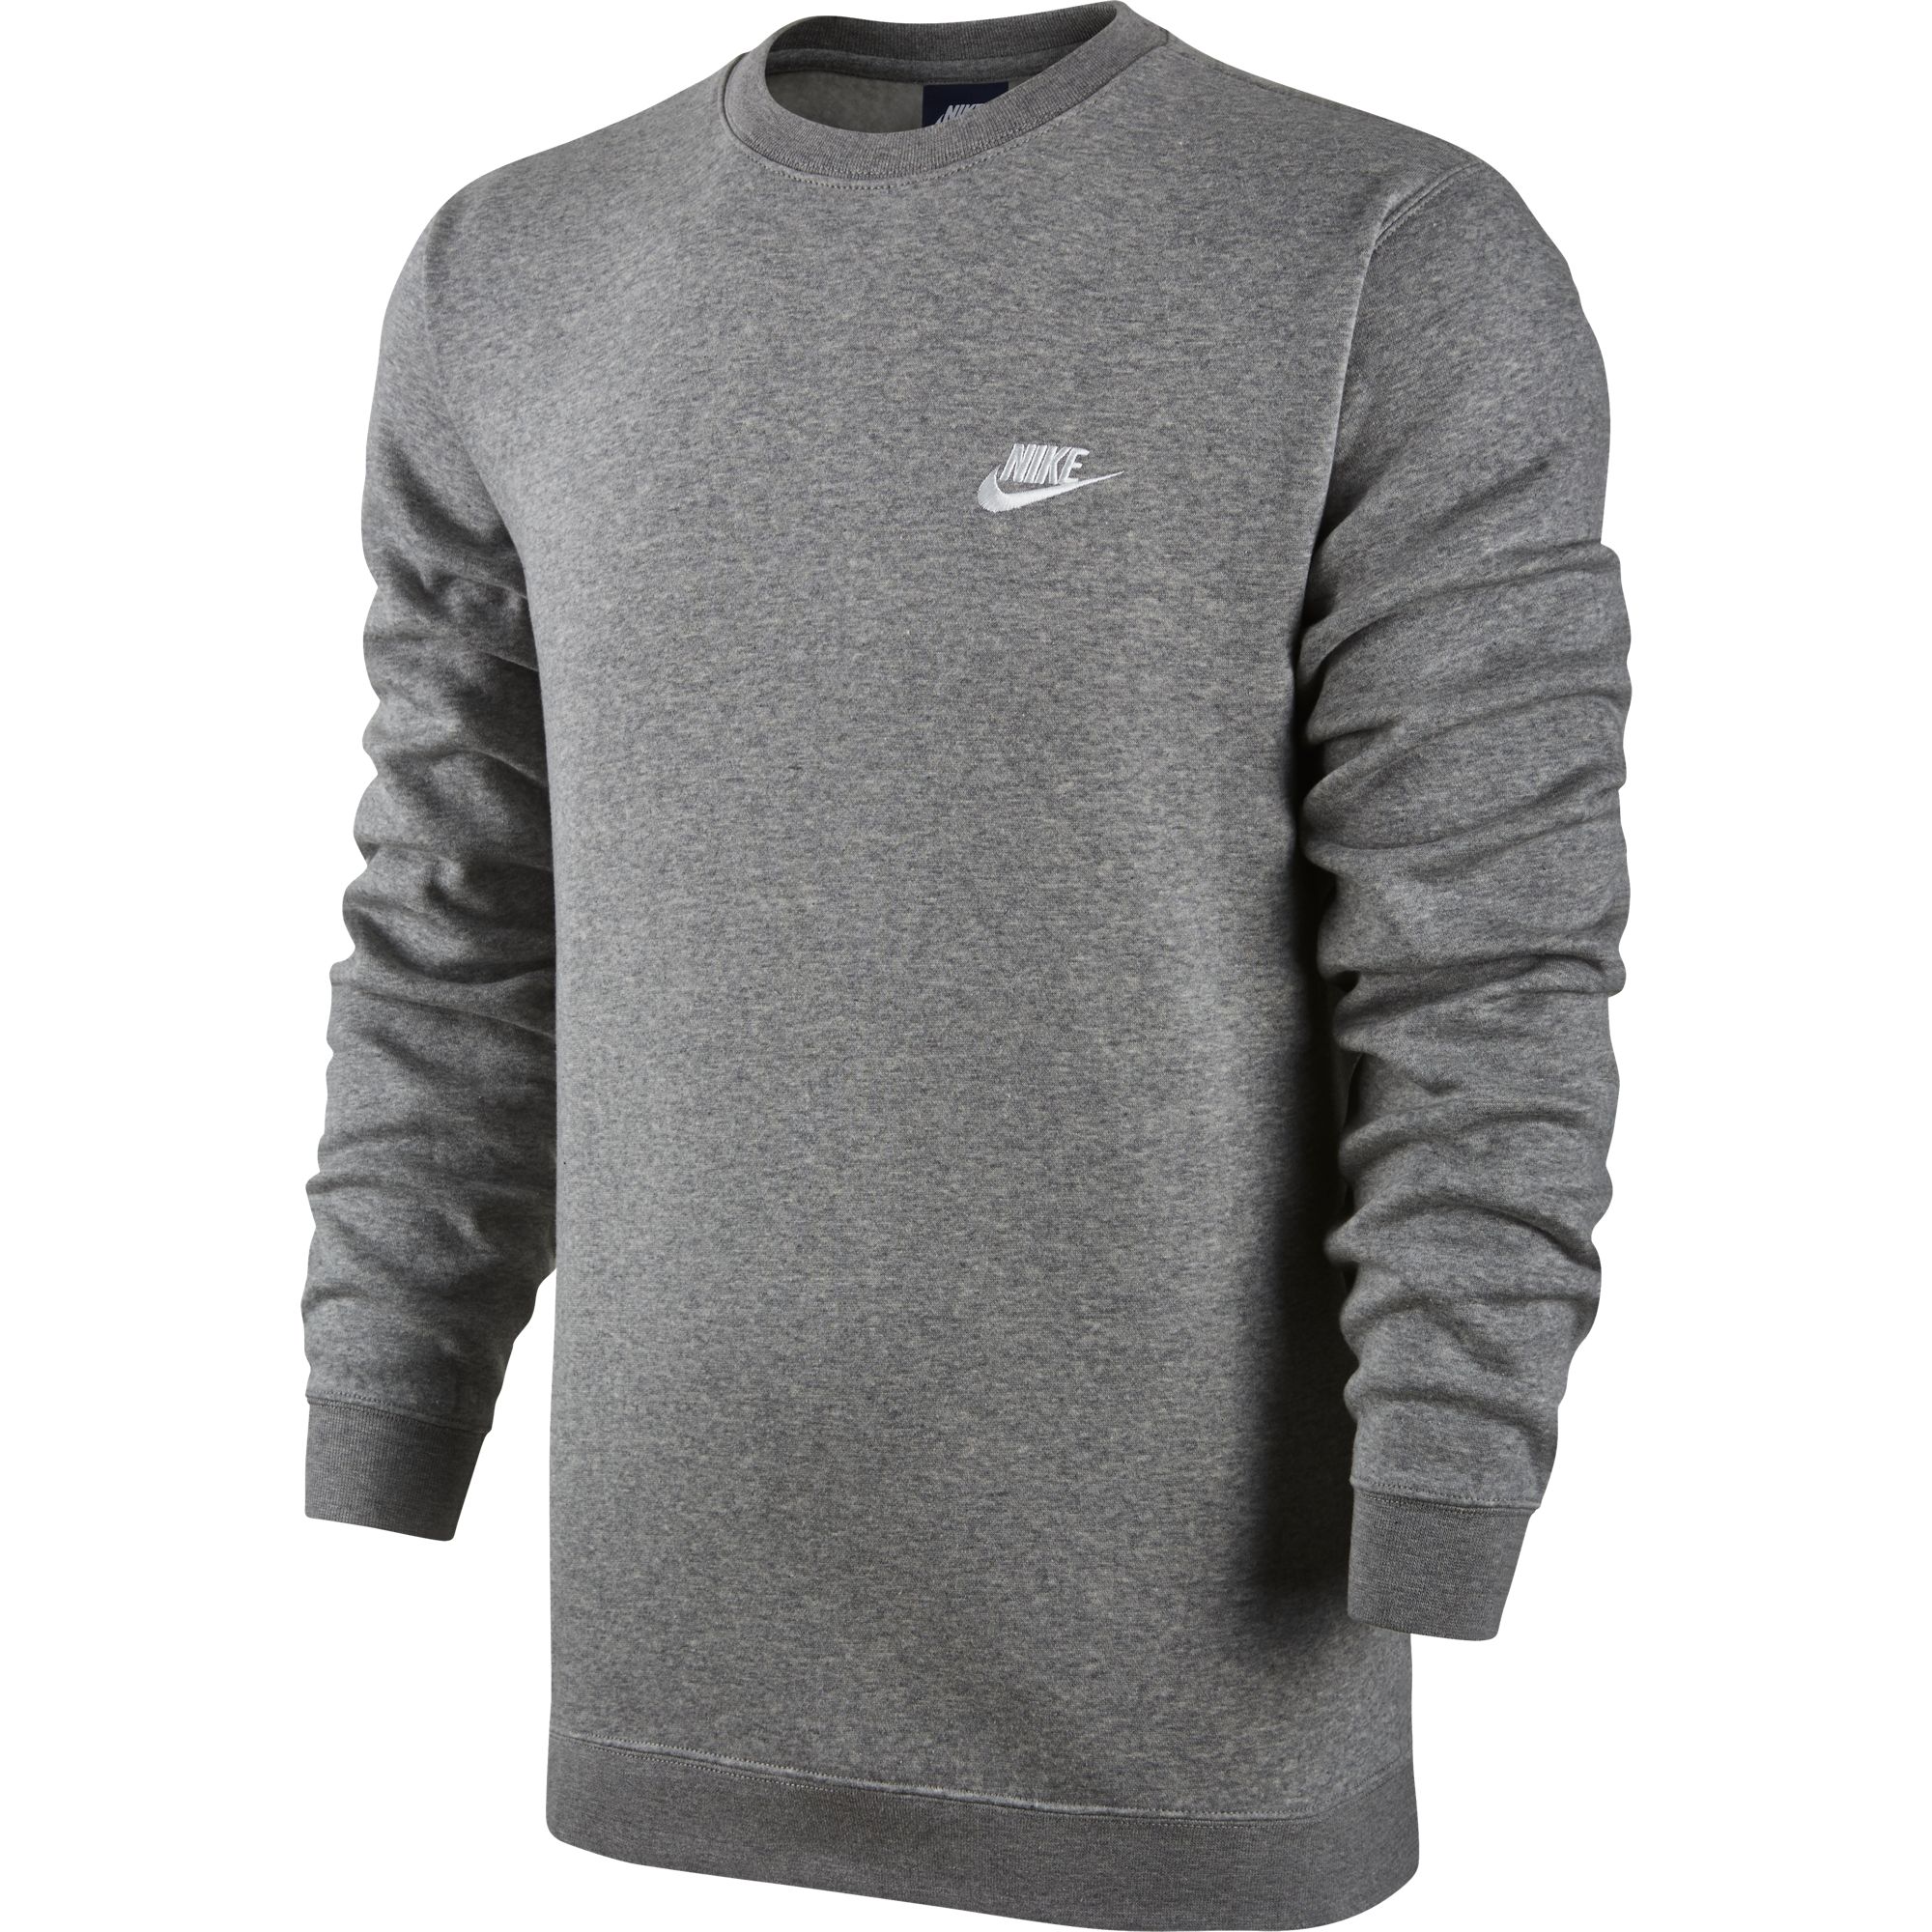 Nike Club Fleece Crew Neck Men's T-Shirt Grey Heather/White 804340-063 - image 1 of 5